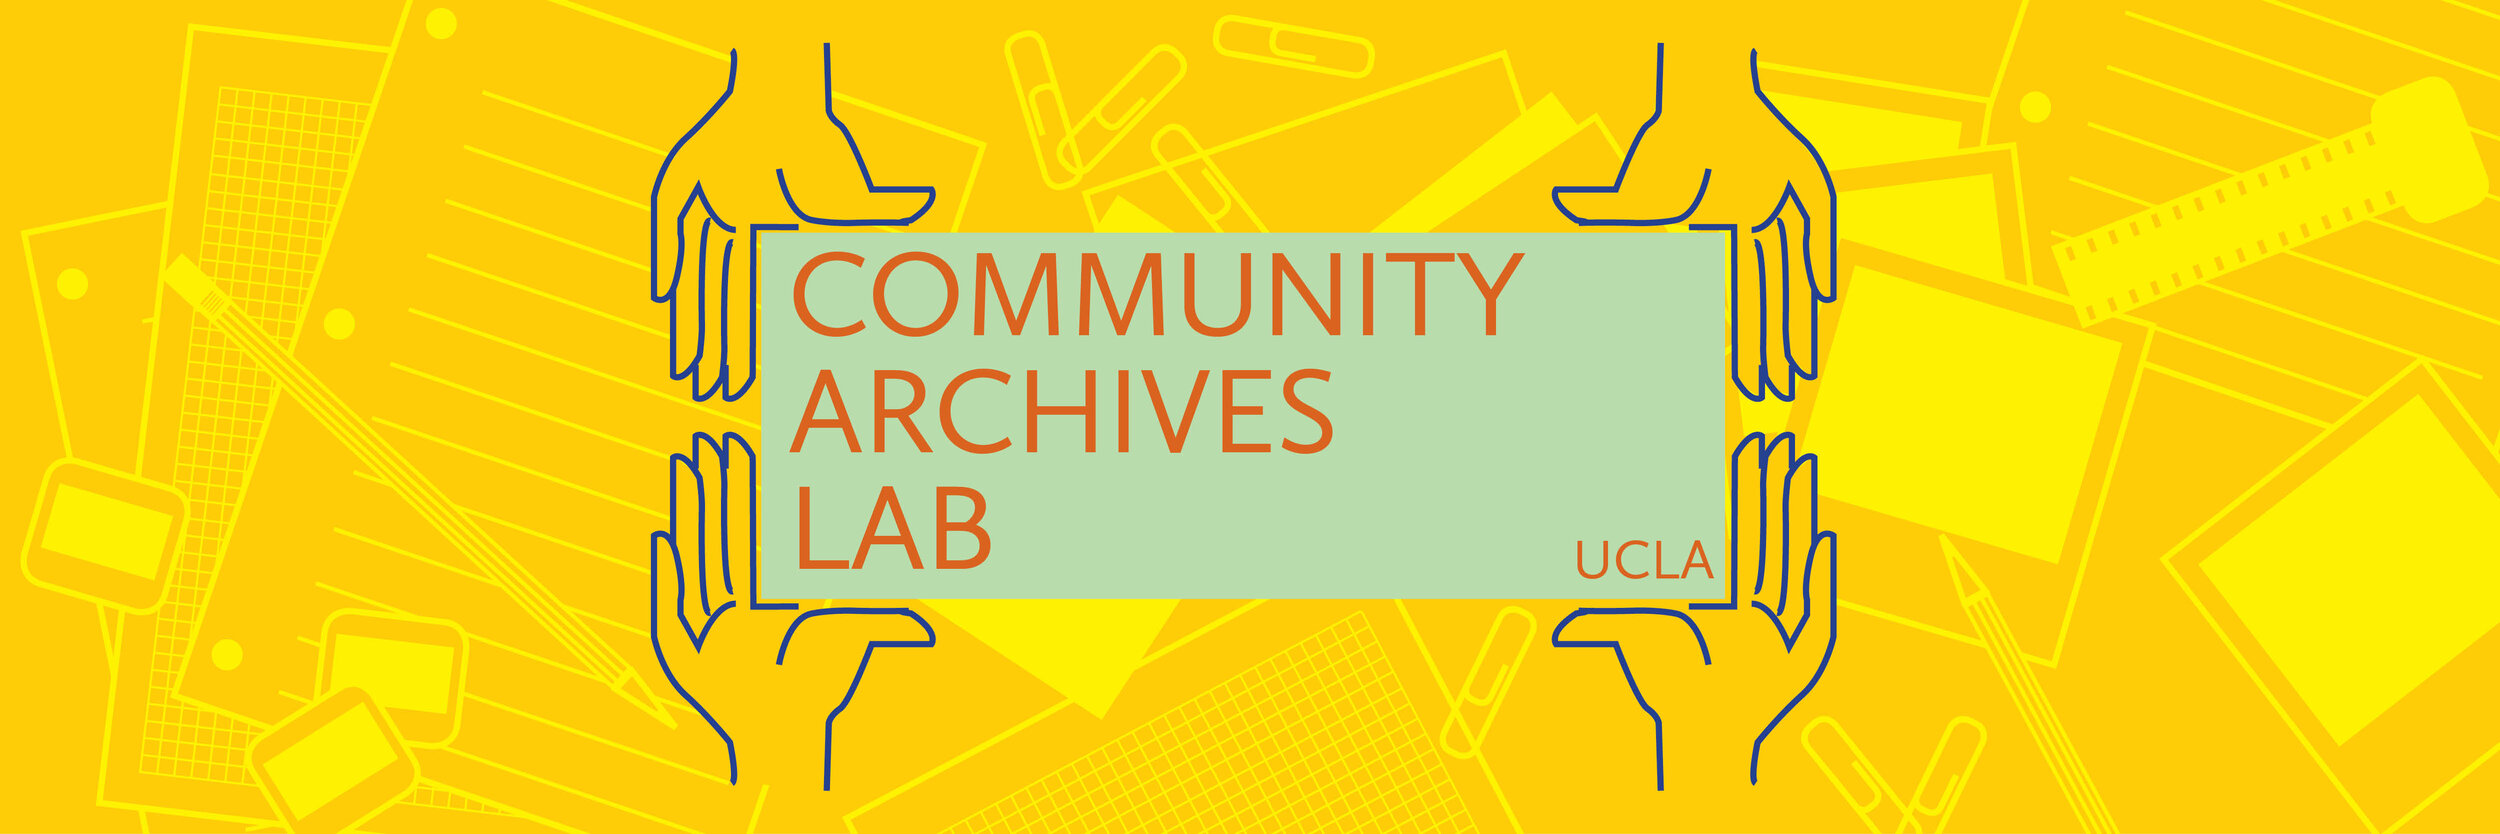 Community Archives Lab UCLA.jpg